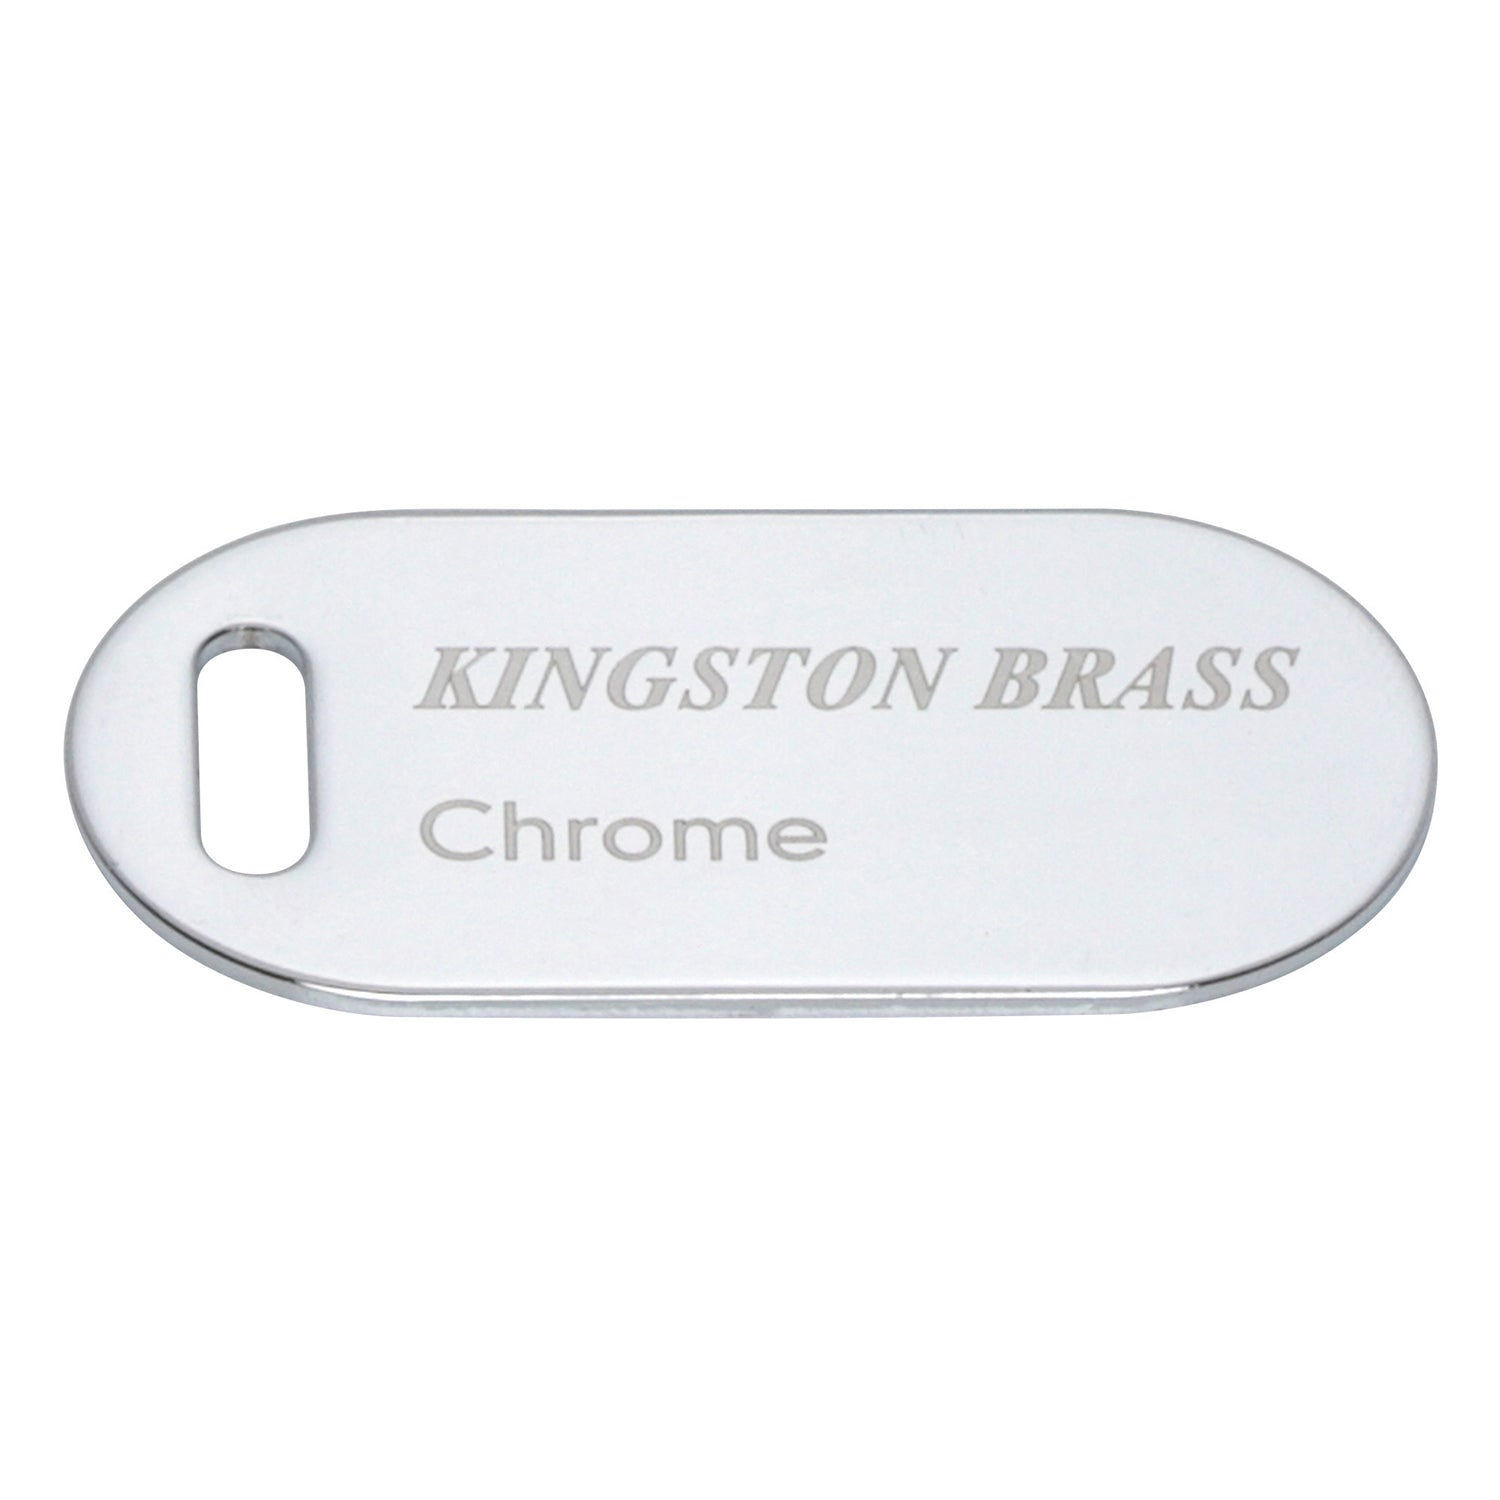 Kingston Brass Metal Finish Color Swatch Sample Ring Set